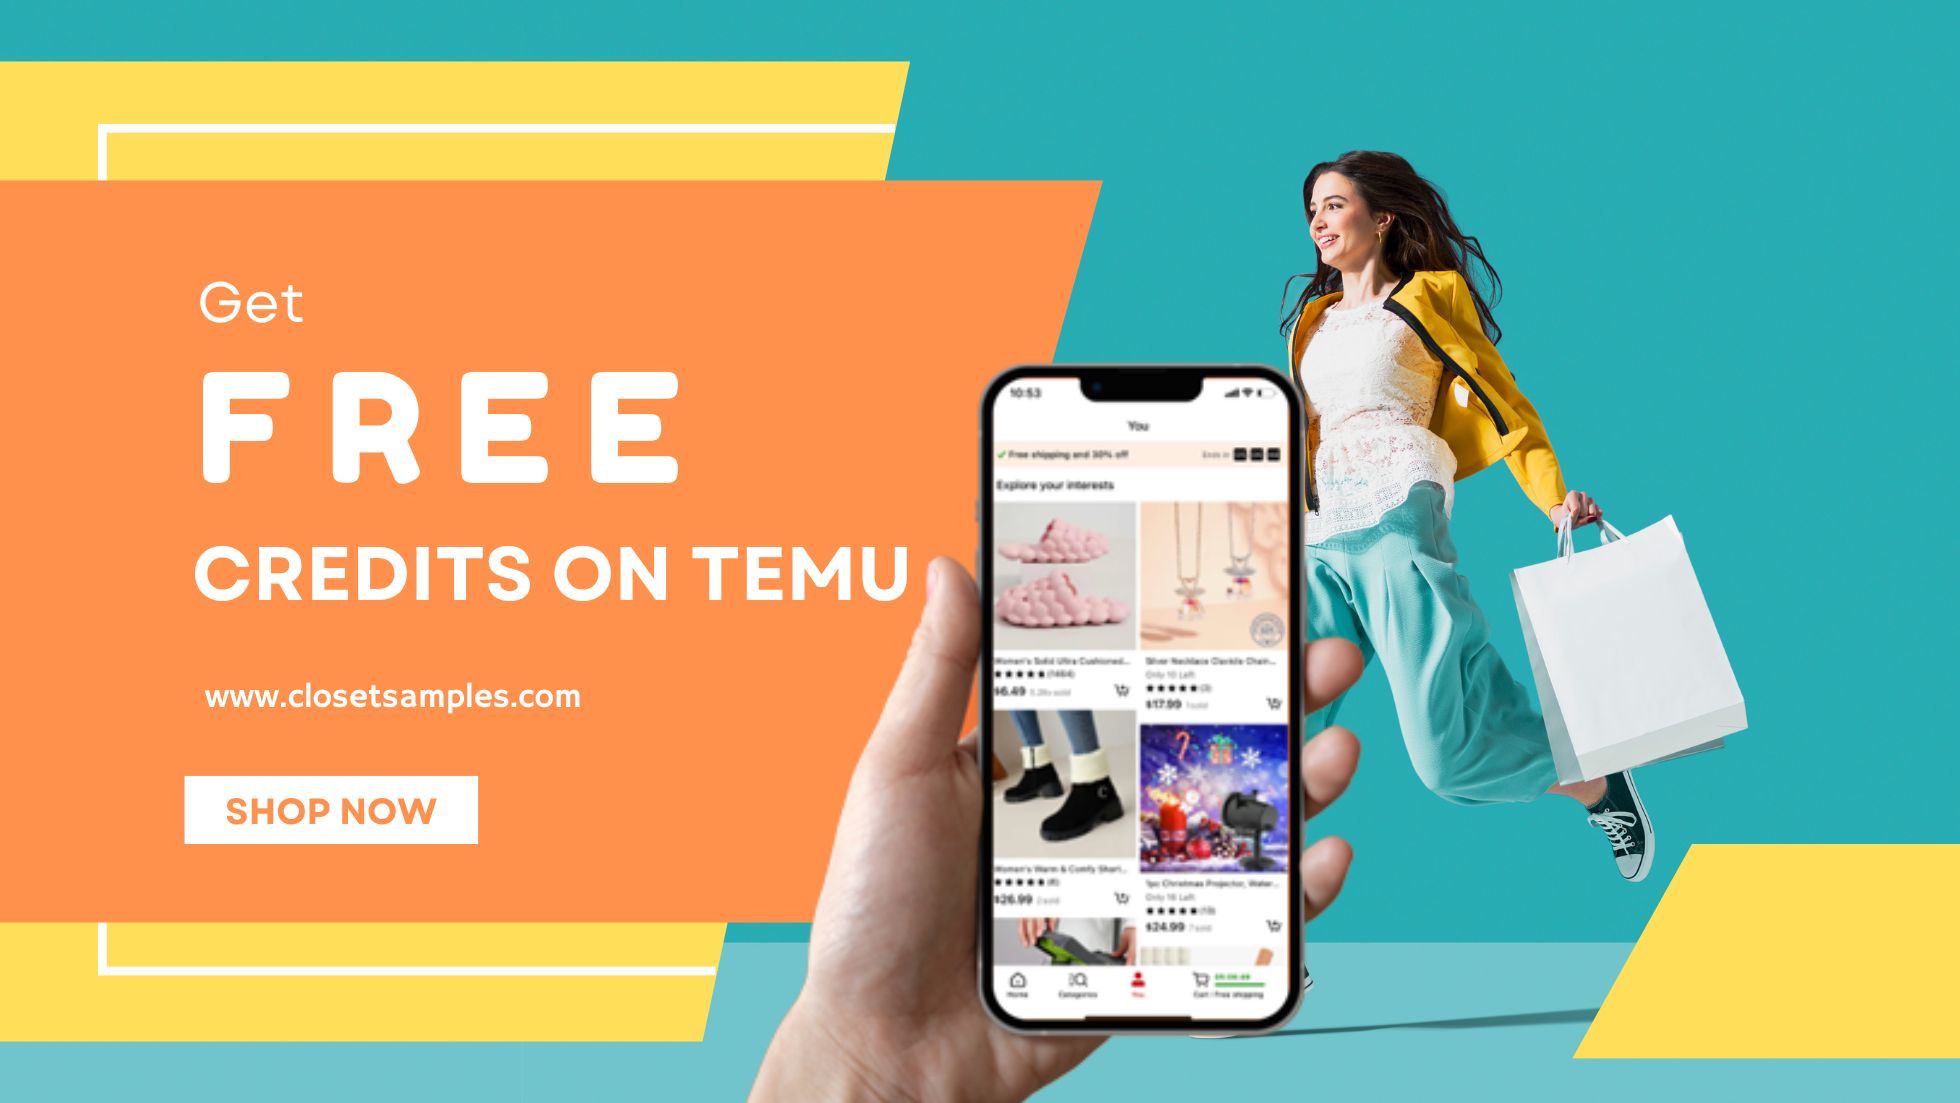 Get FREE Credits on the Temu App closetsamples